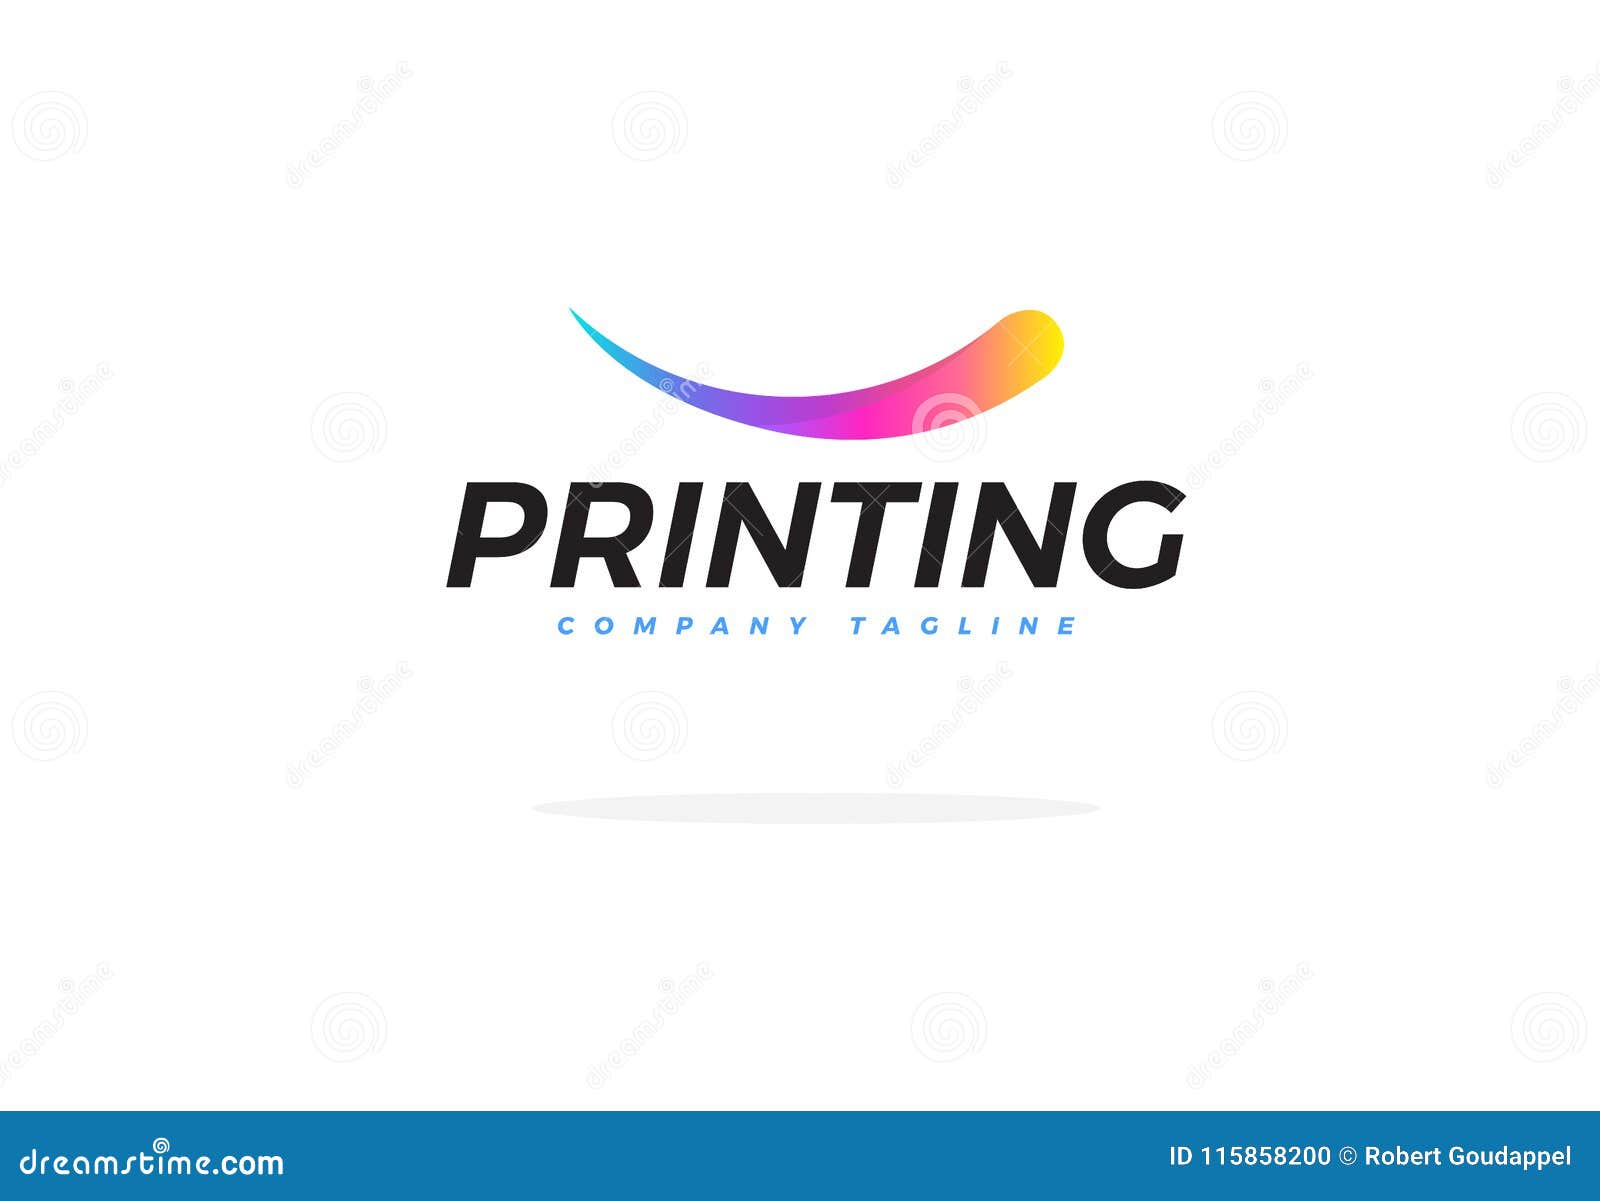 Digital Printing Logos | Digital Printing Logo Maker | BrandCrowd